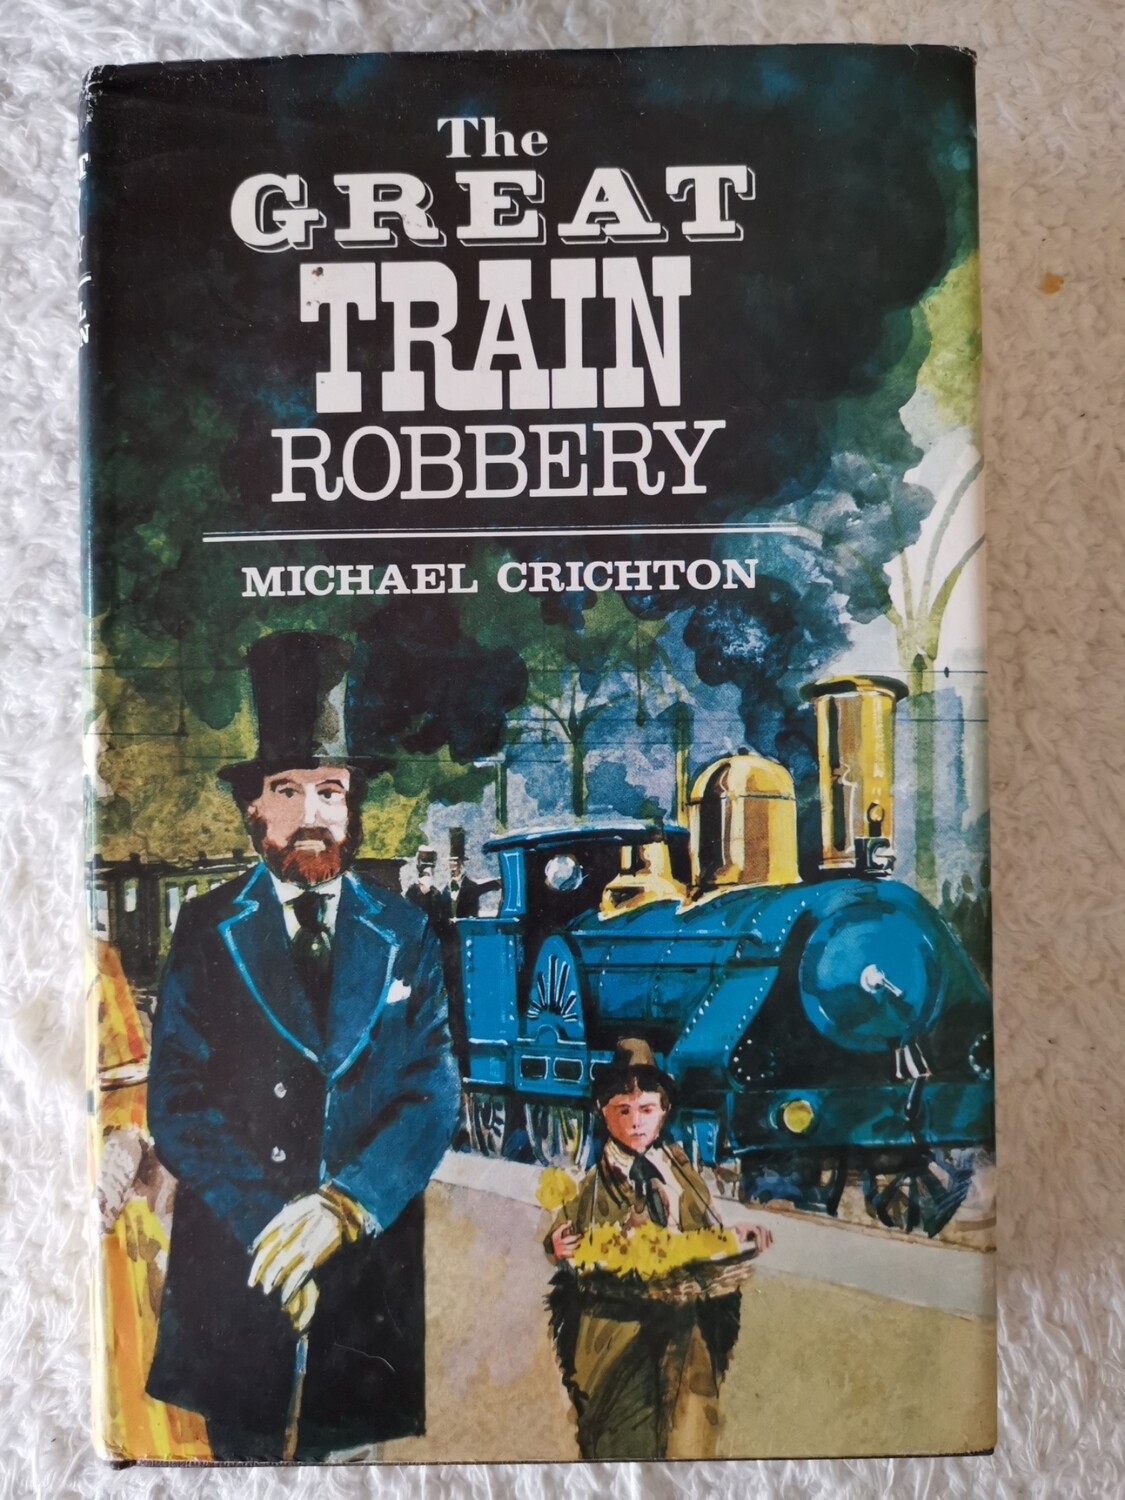 The great train robbery, Michael Chrichton